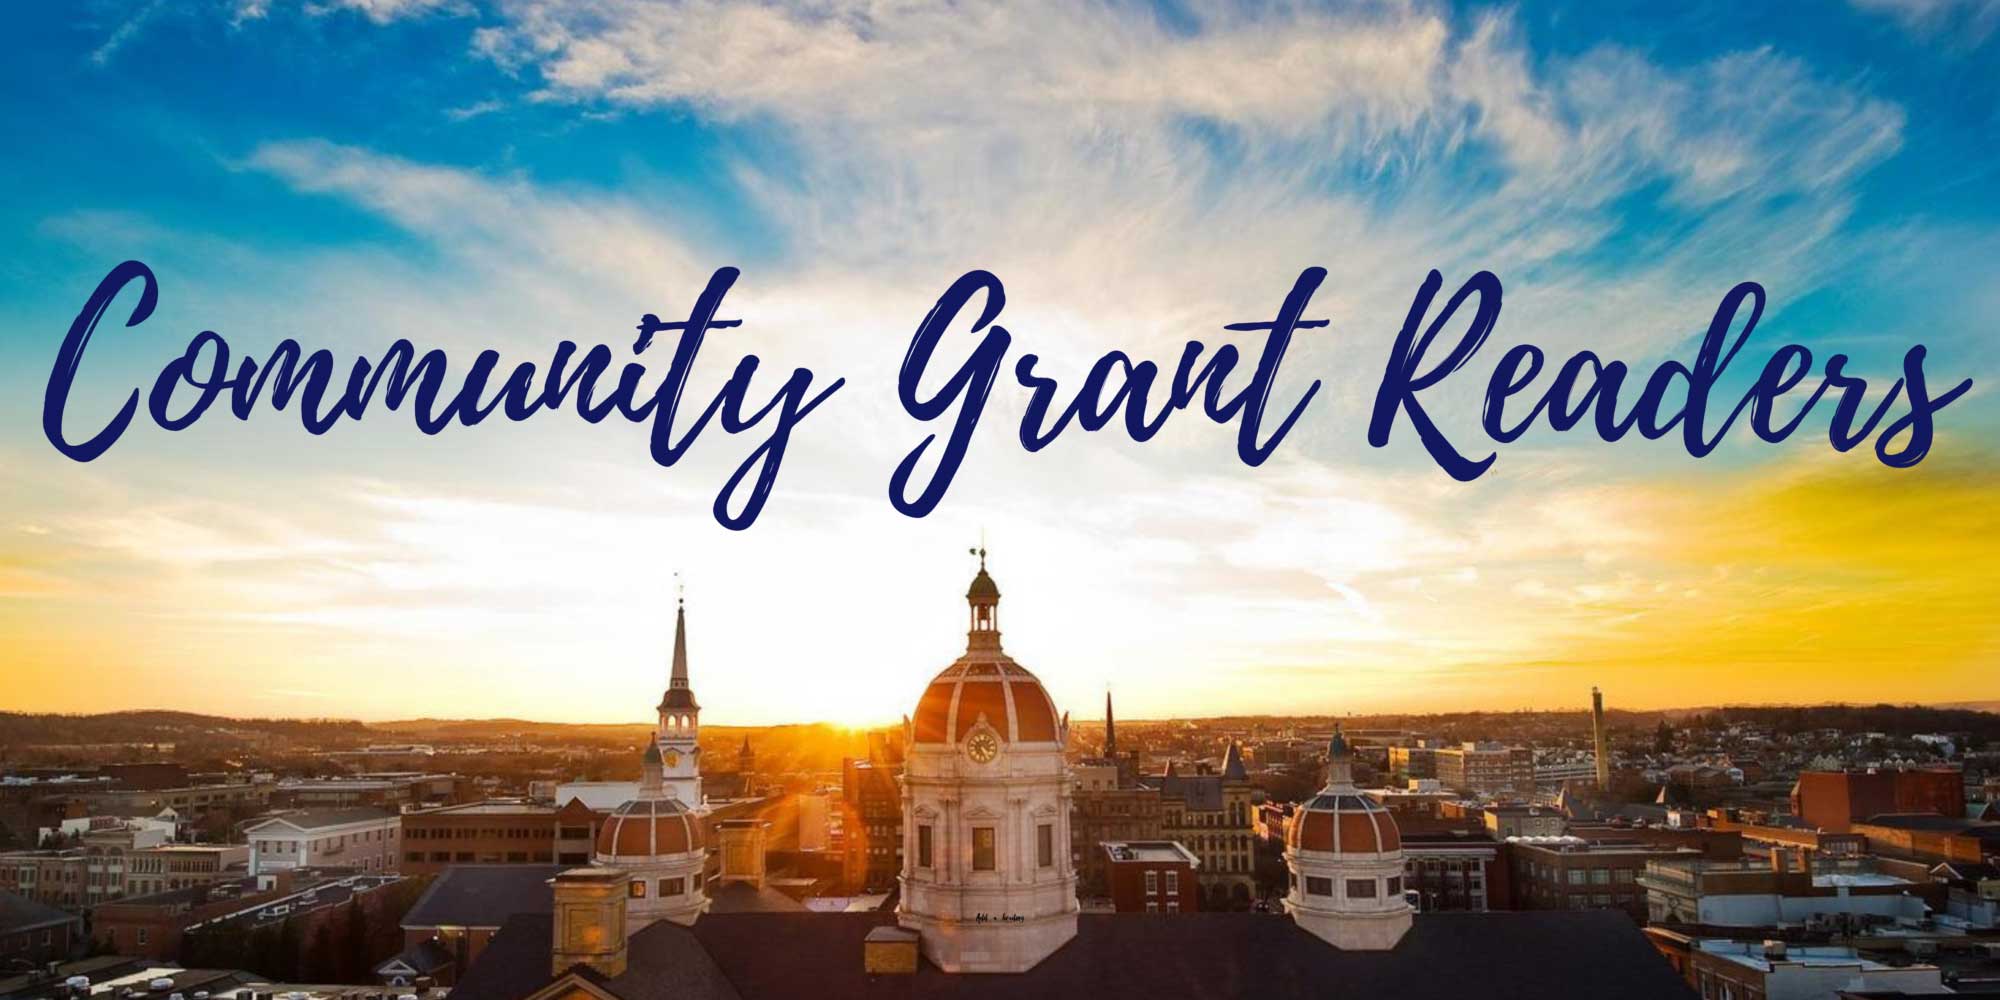 Community Grant Reader: Charles Hoffman